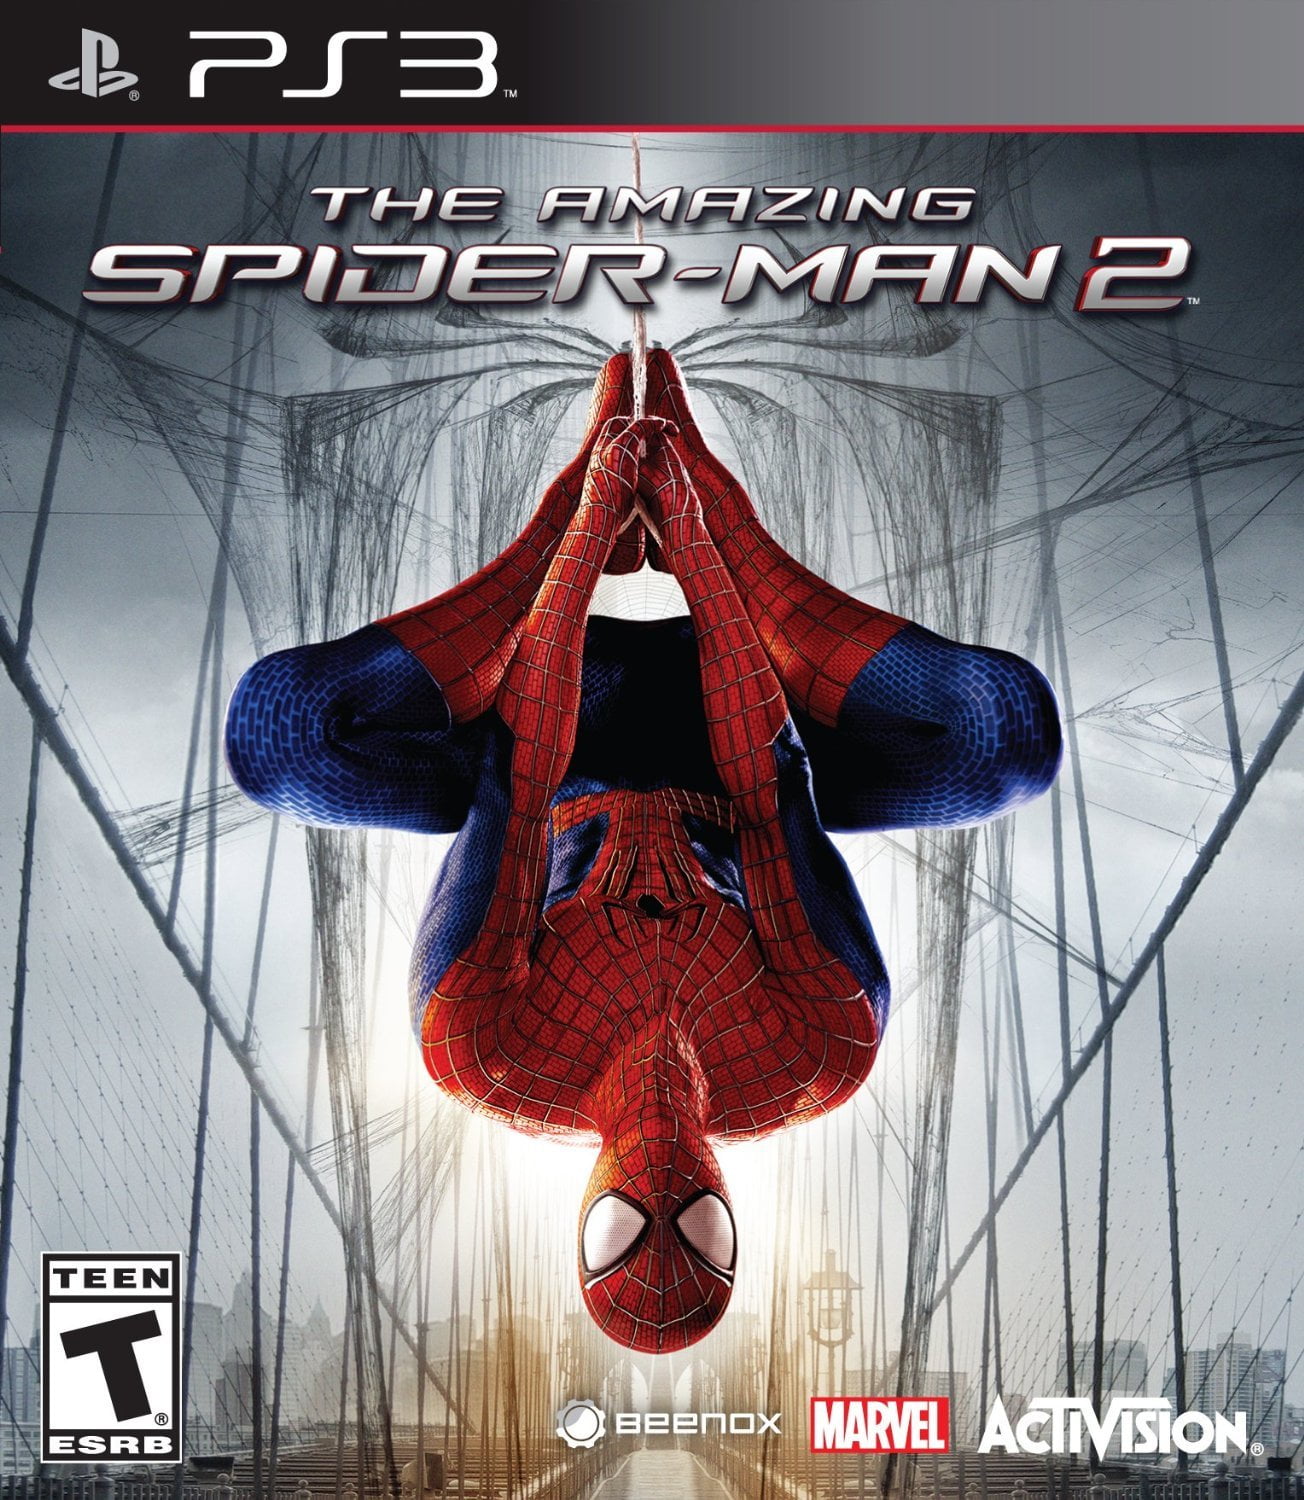 The Amazing Spiderman 2 (PS3) - Walmart.com